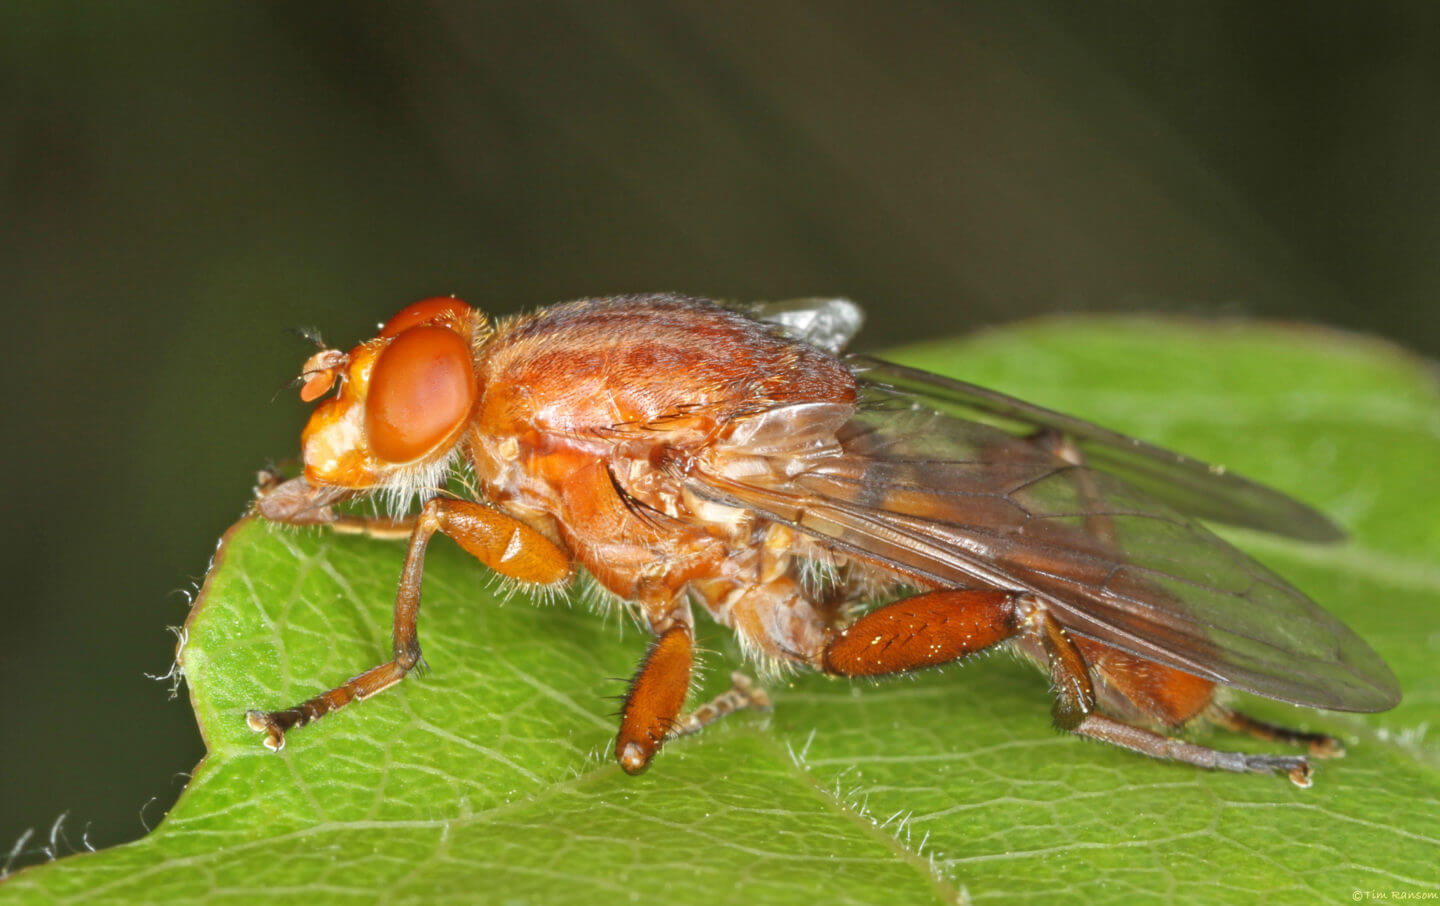 Aspen hoverfly